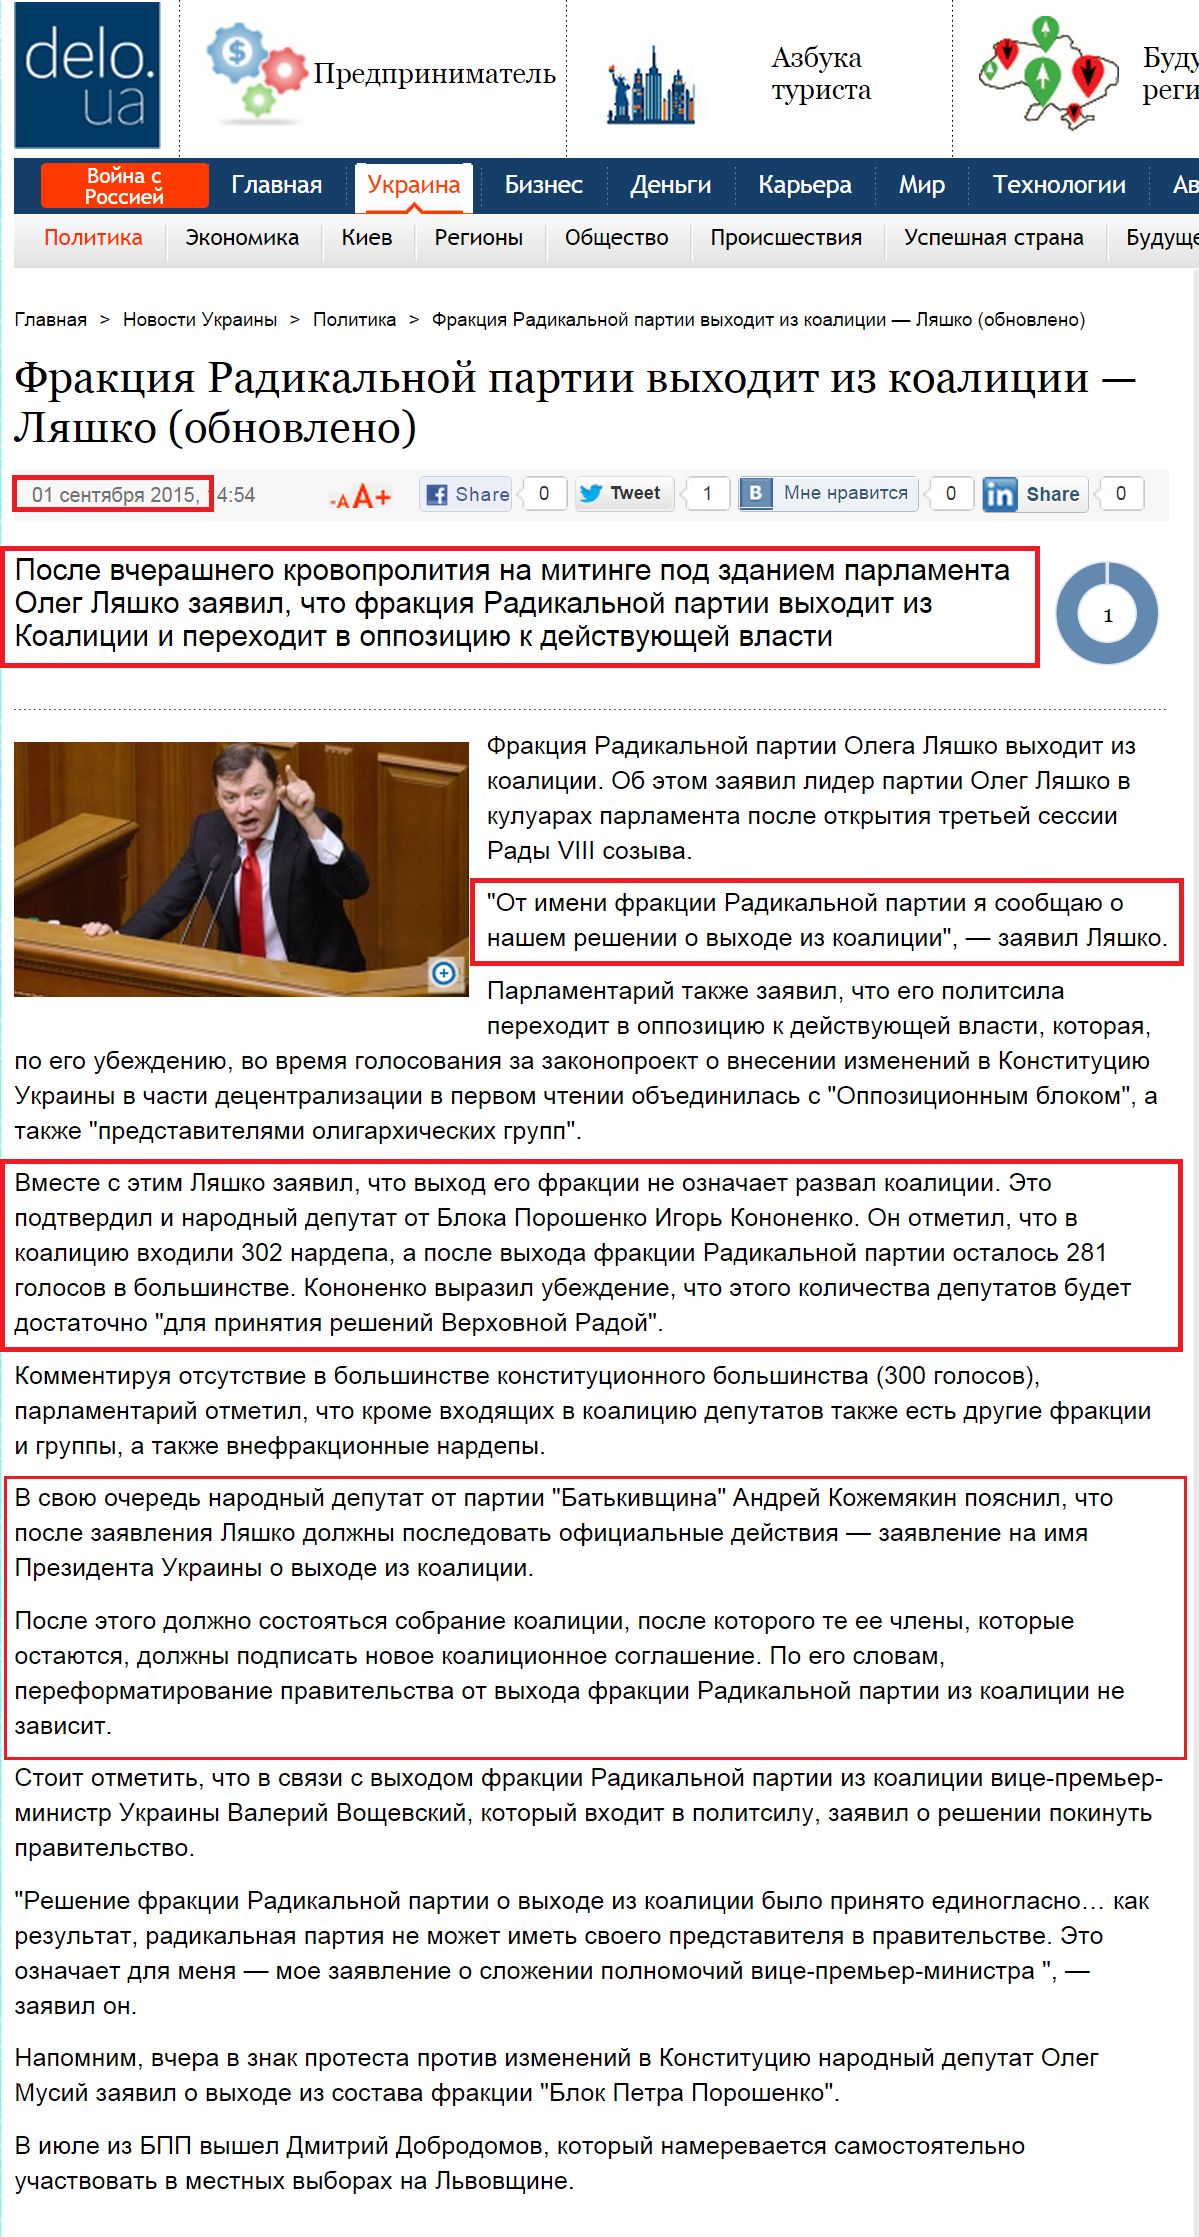 http://delo.ua/ukraine/frakcija-radikalnoj-partii-vyhodit-iz-koalicii-ljashko-302984/?supdated_new=1441111471